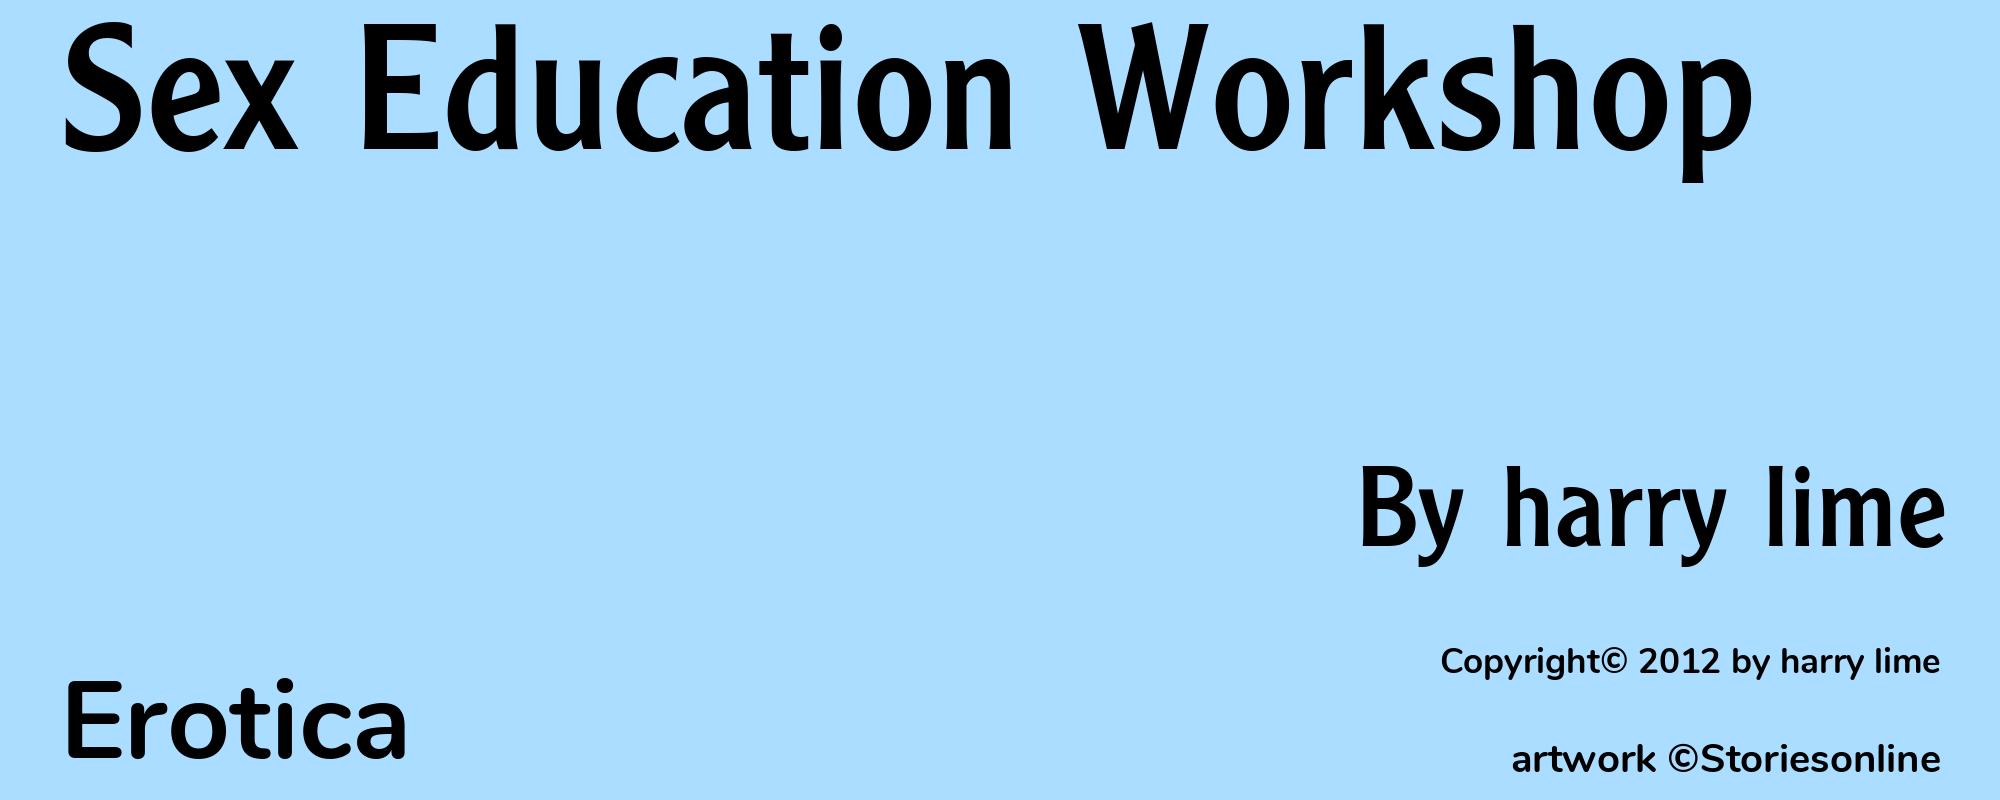 Sex Education Workshop - Cover